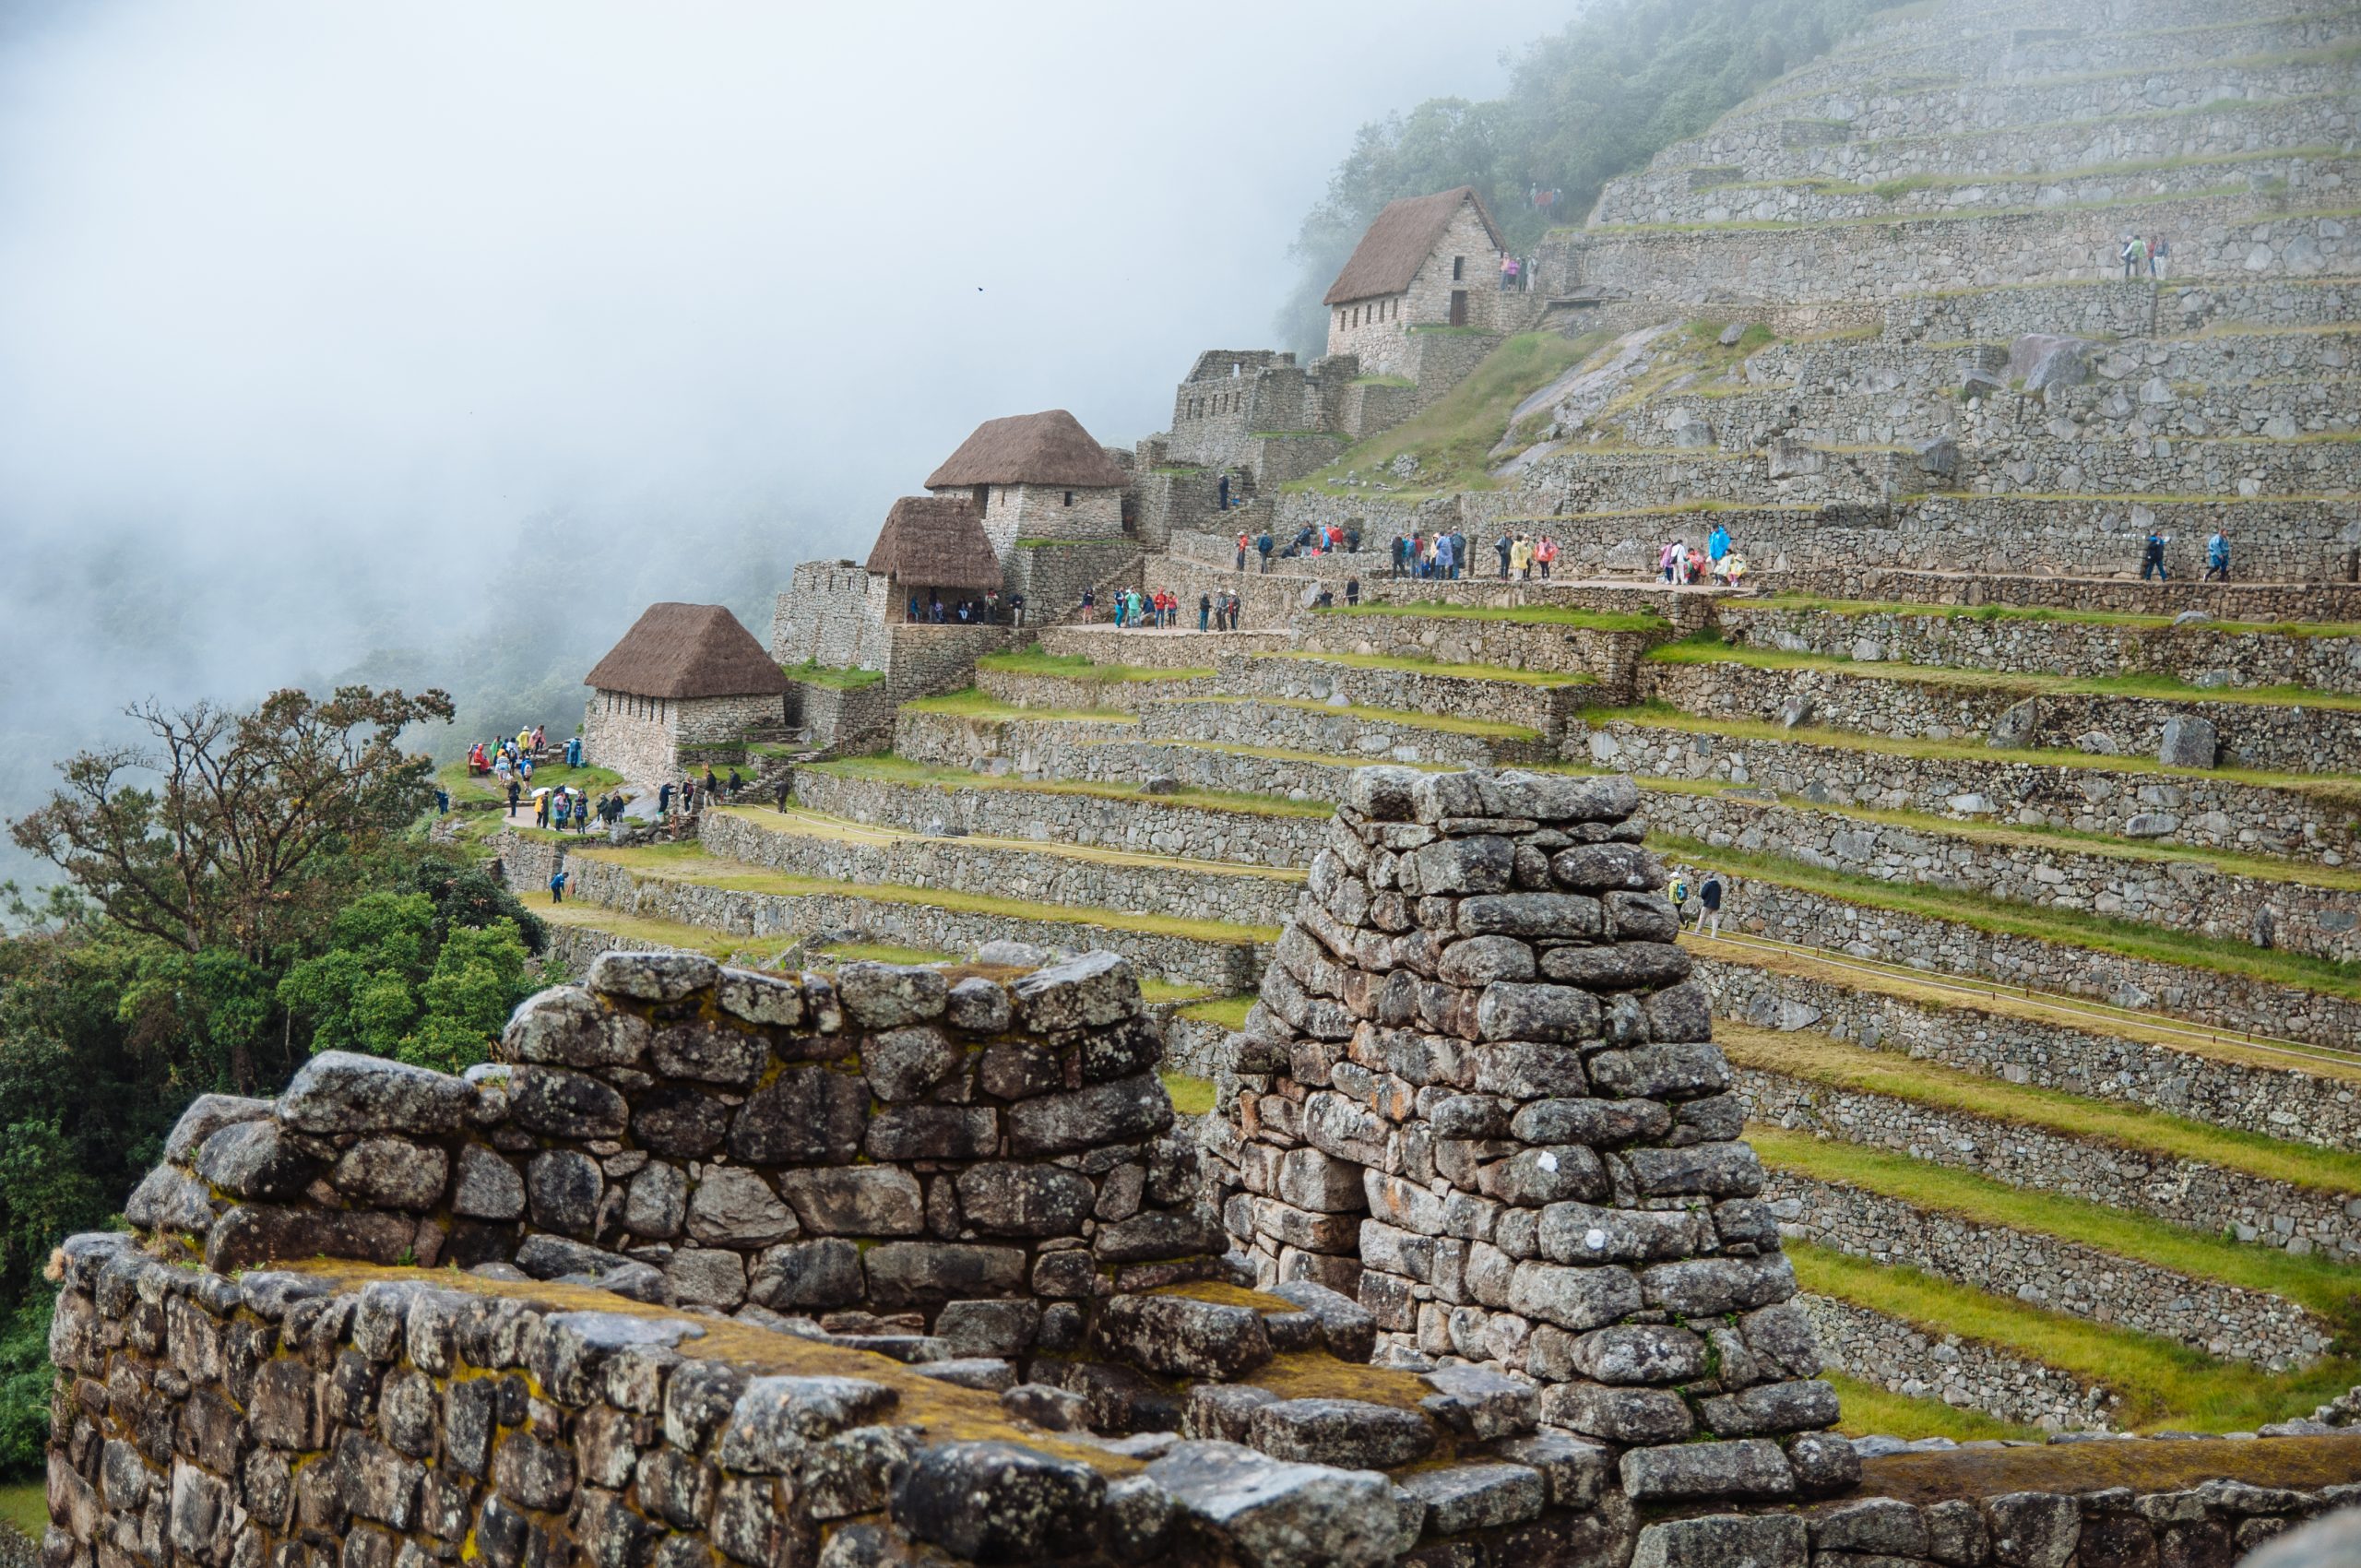 A view of the Urumbamba River far below the Machu Picchu Citadel